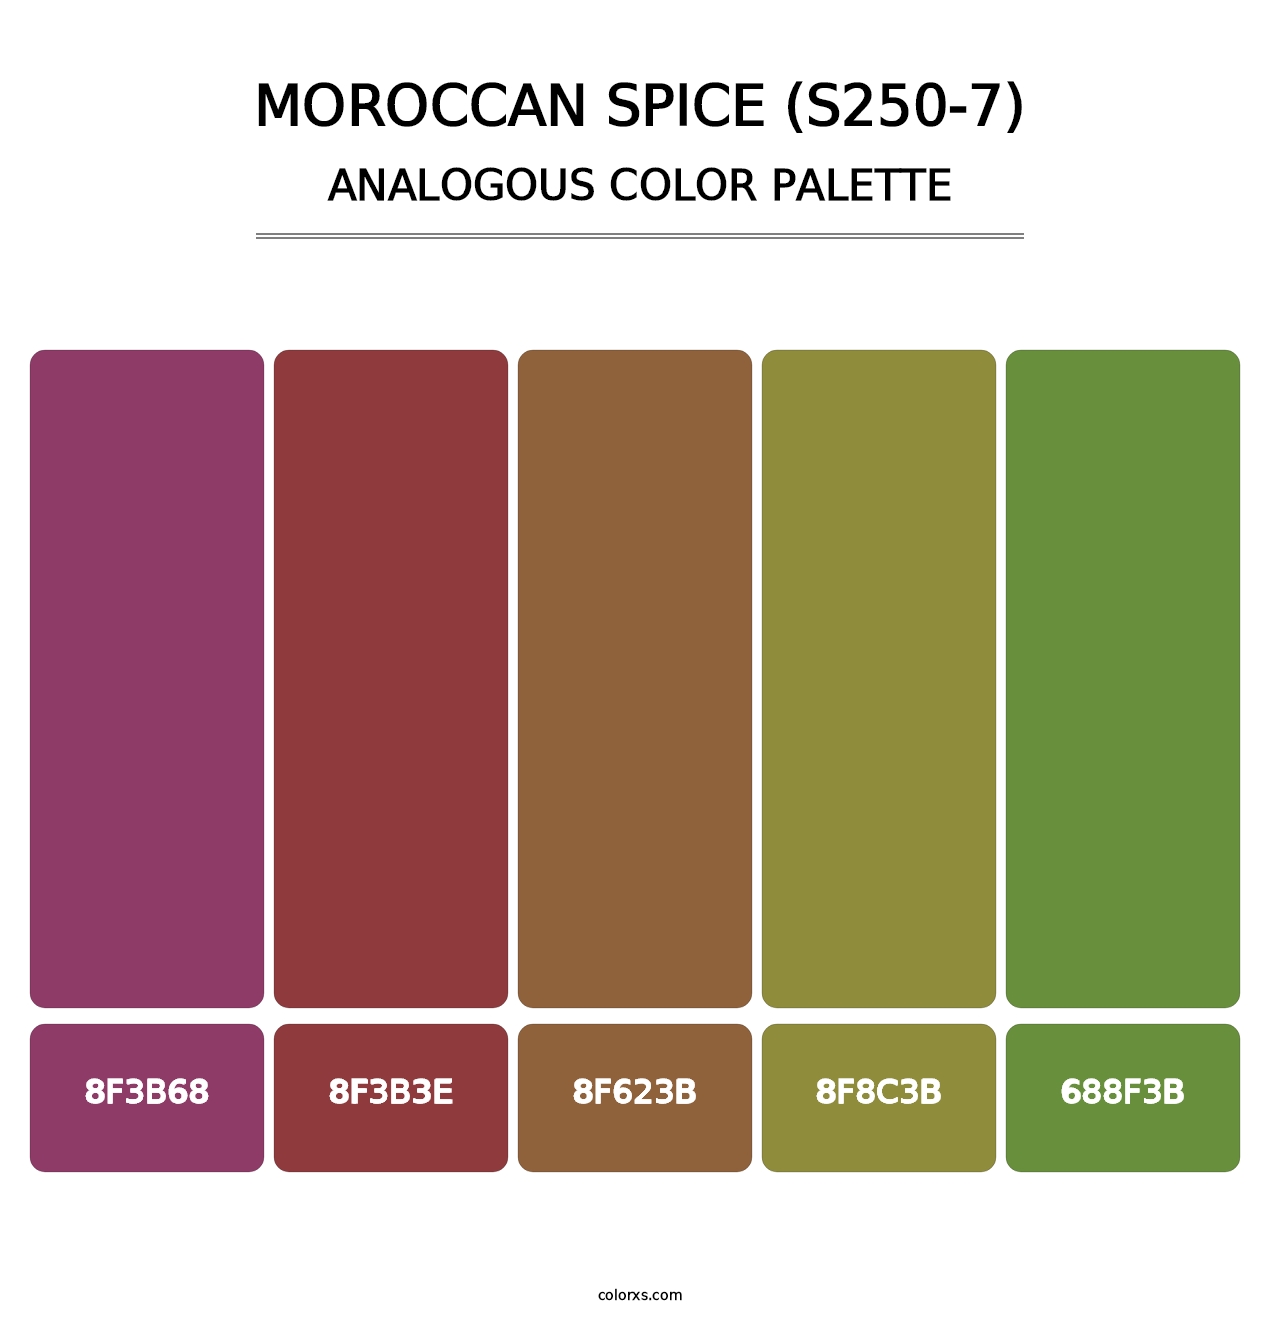 Moroccan Spice (S250-7) - Analogous Color Palette